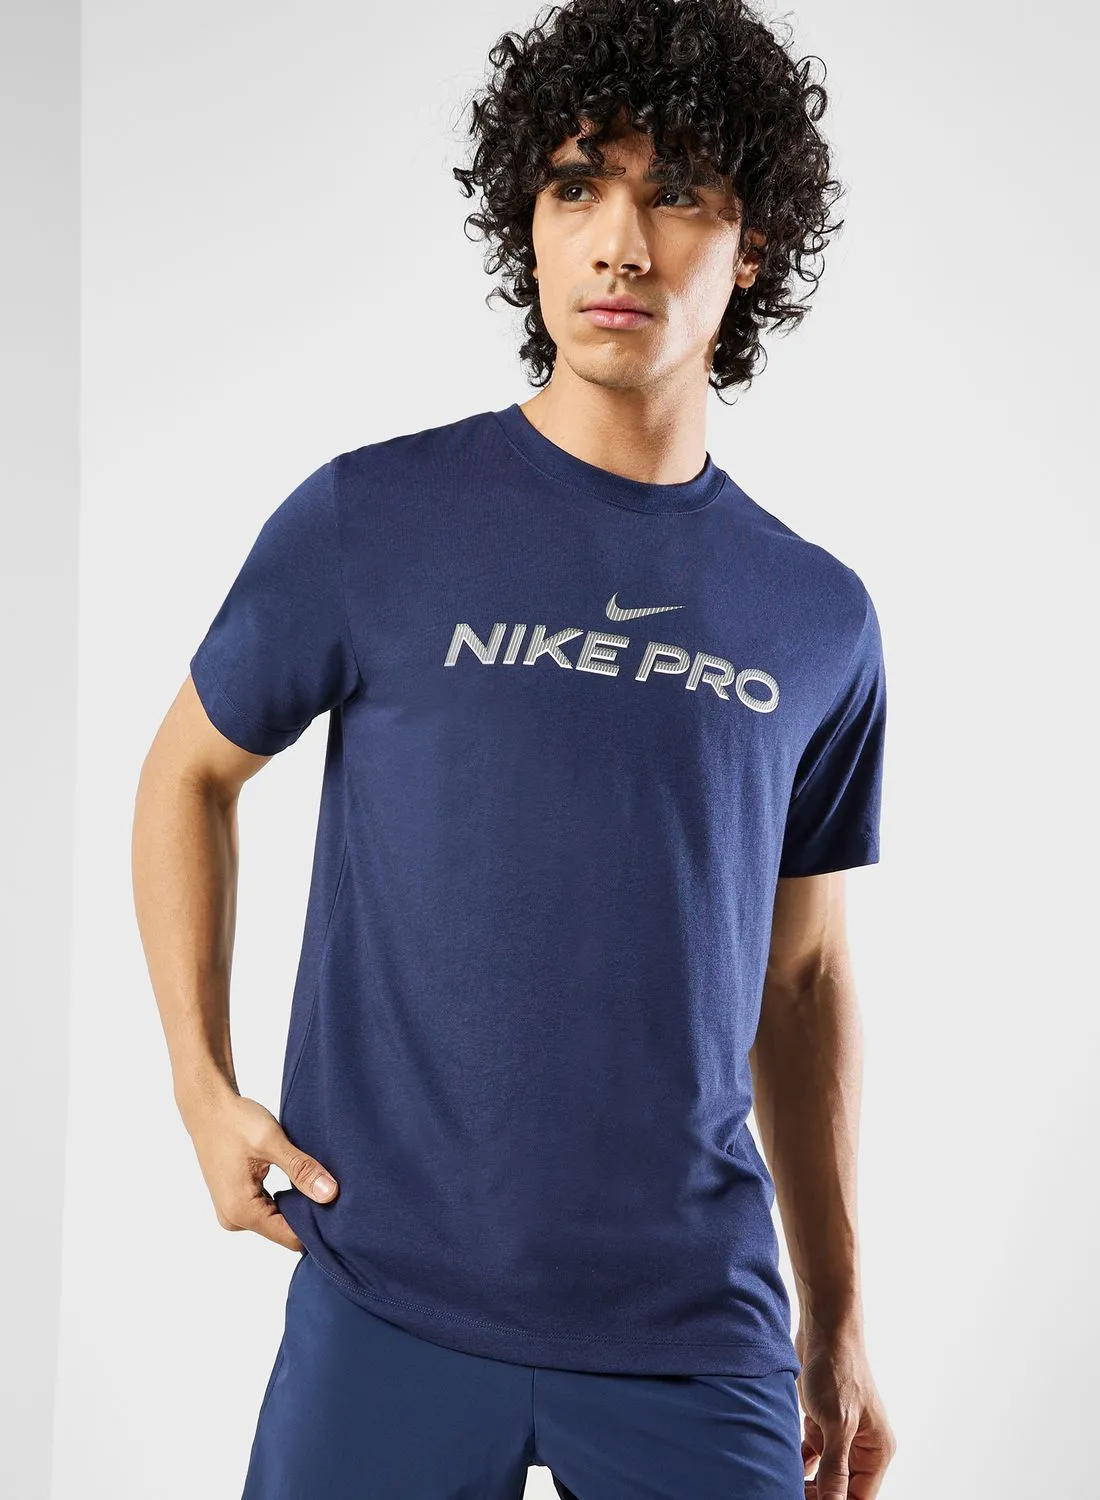 Nike Dri-Fit Pro T-Shirt